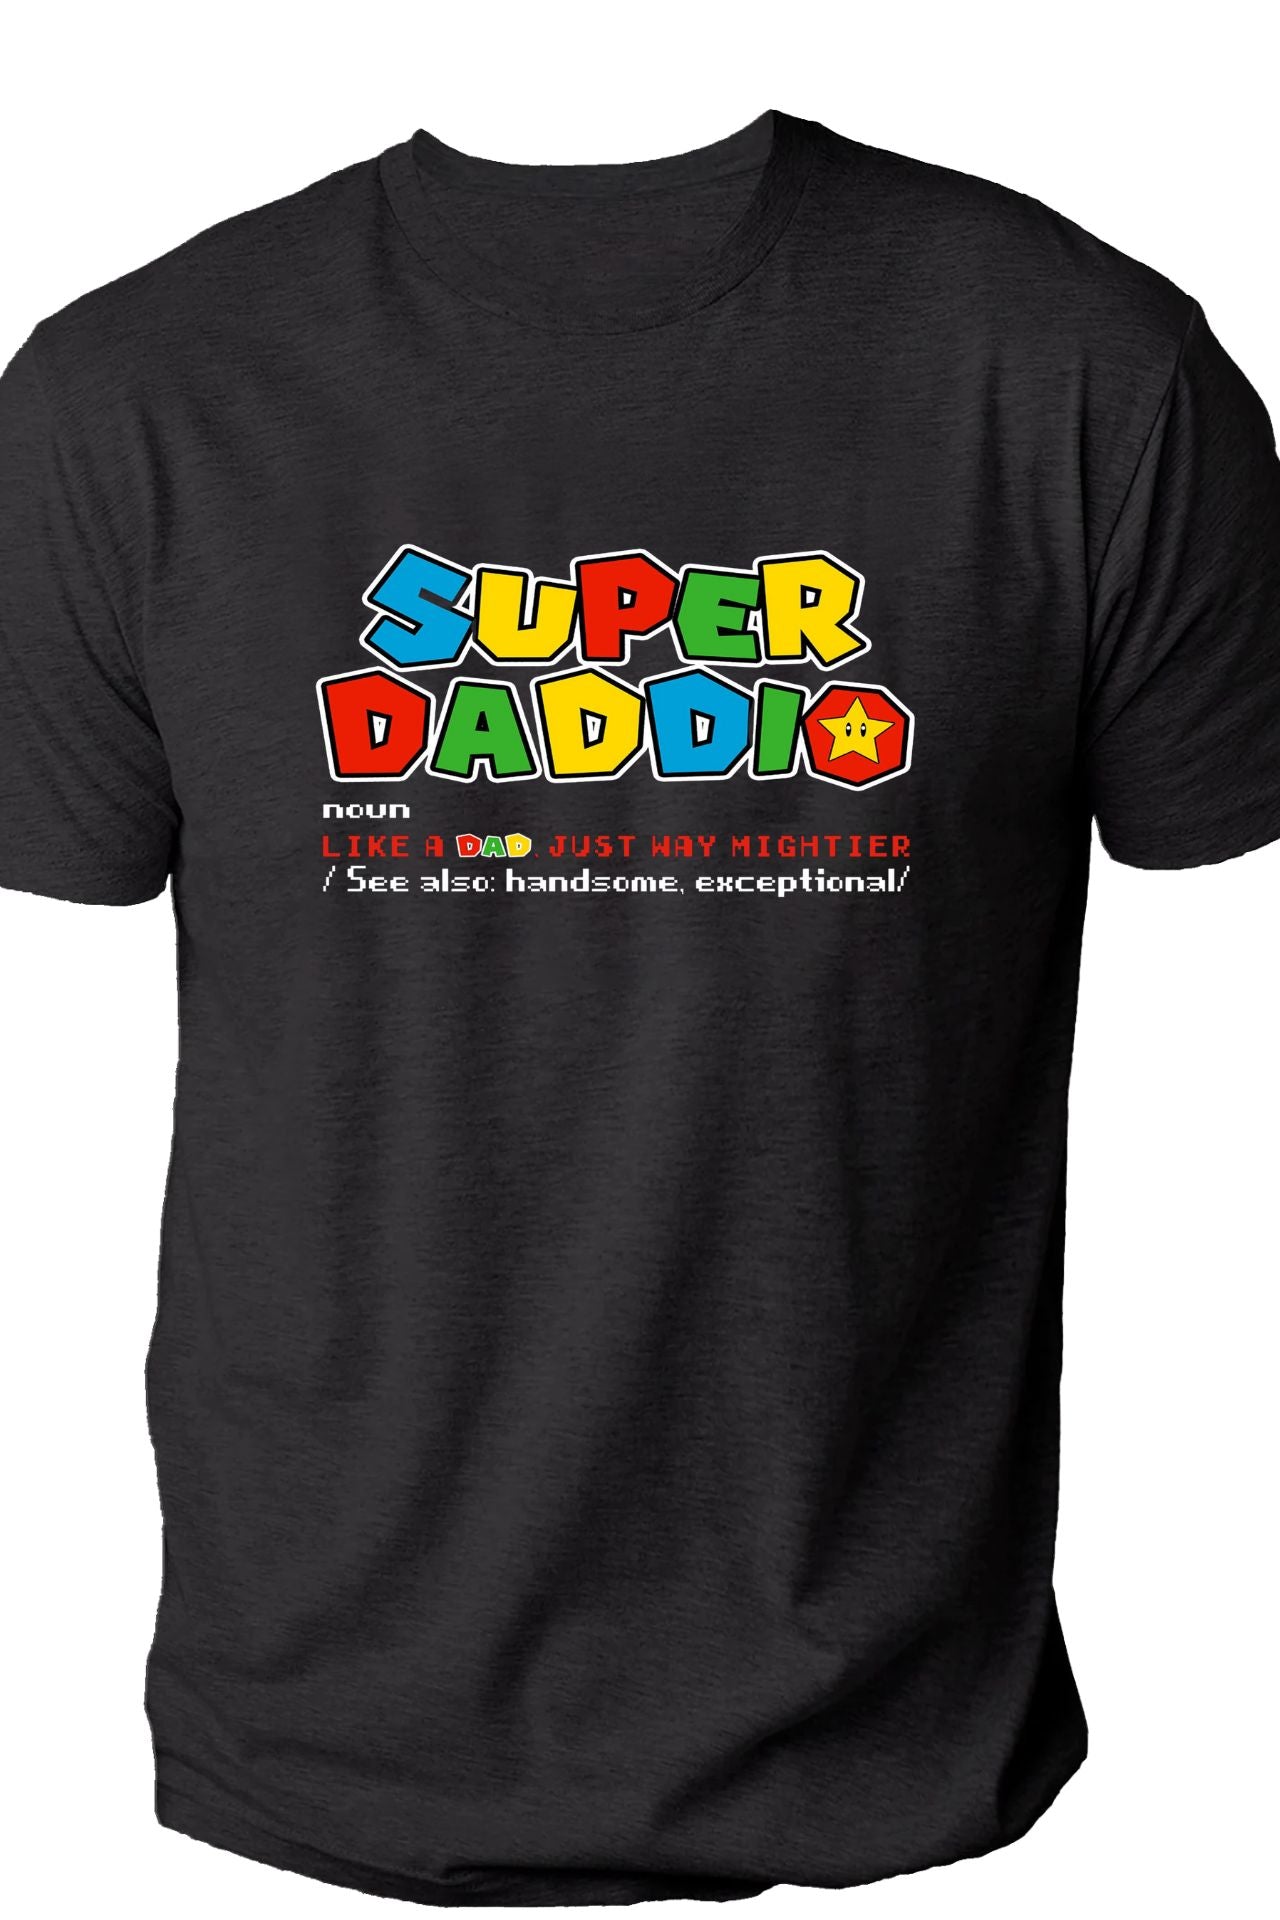 Super Daddio Tshirt 